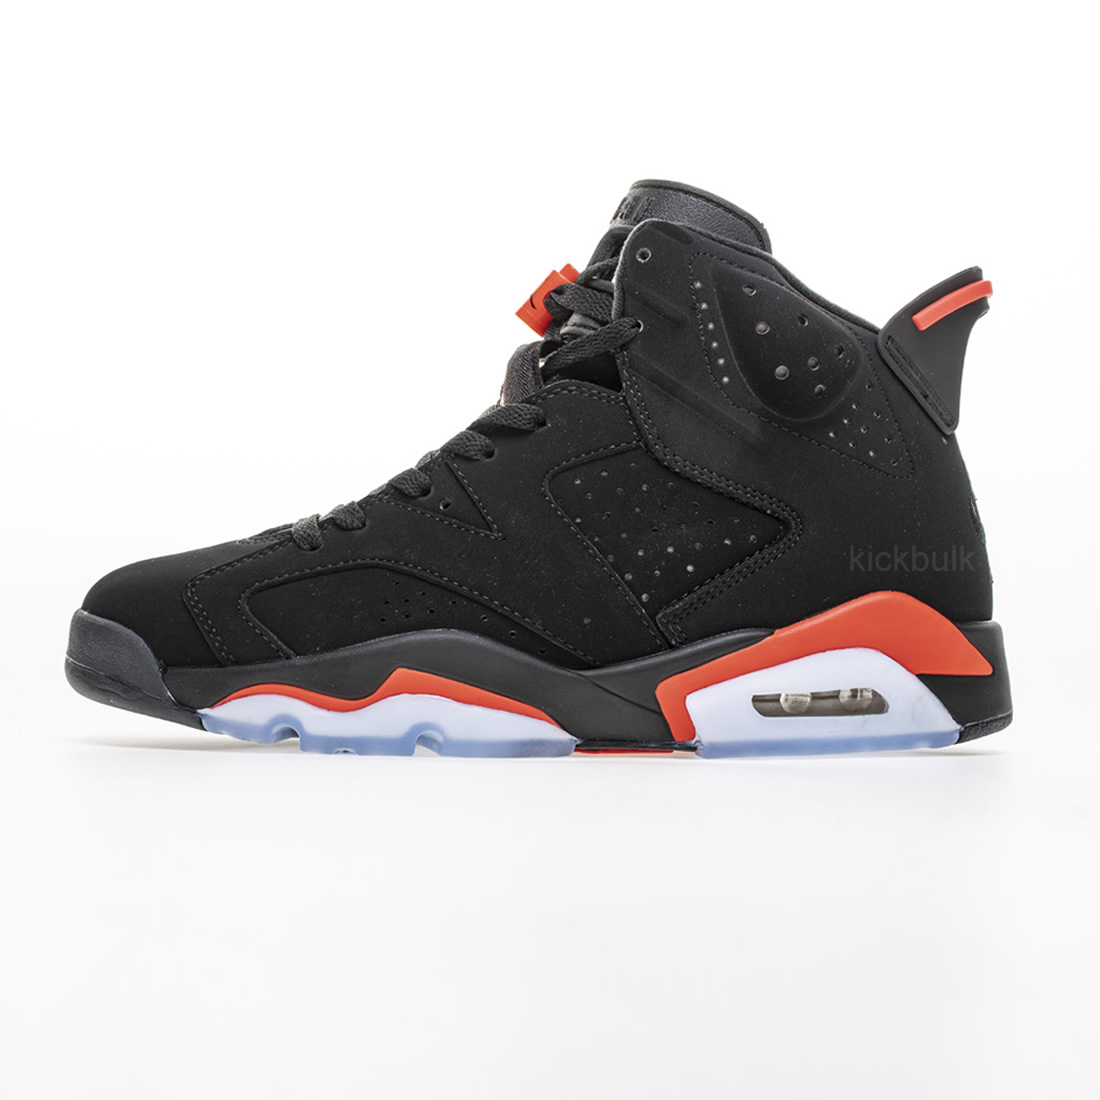 Nike Air Jordan 6 Black Infrared 384664 060 1 - kickbulk.co